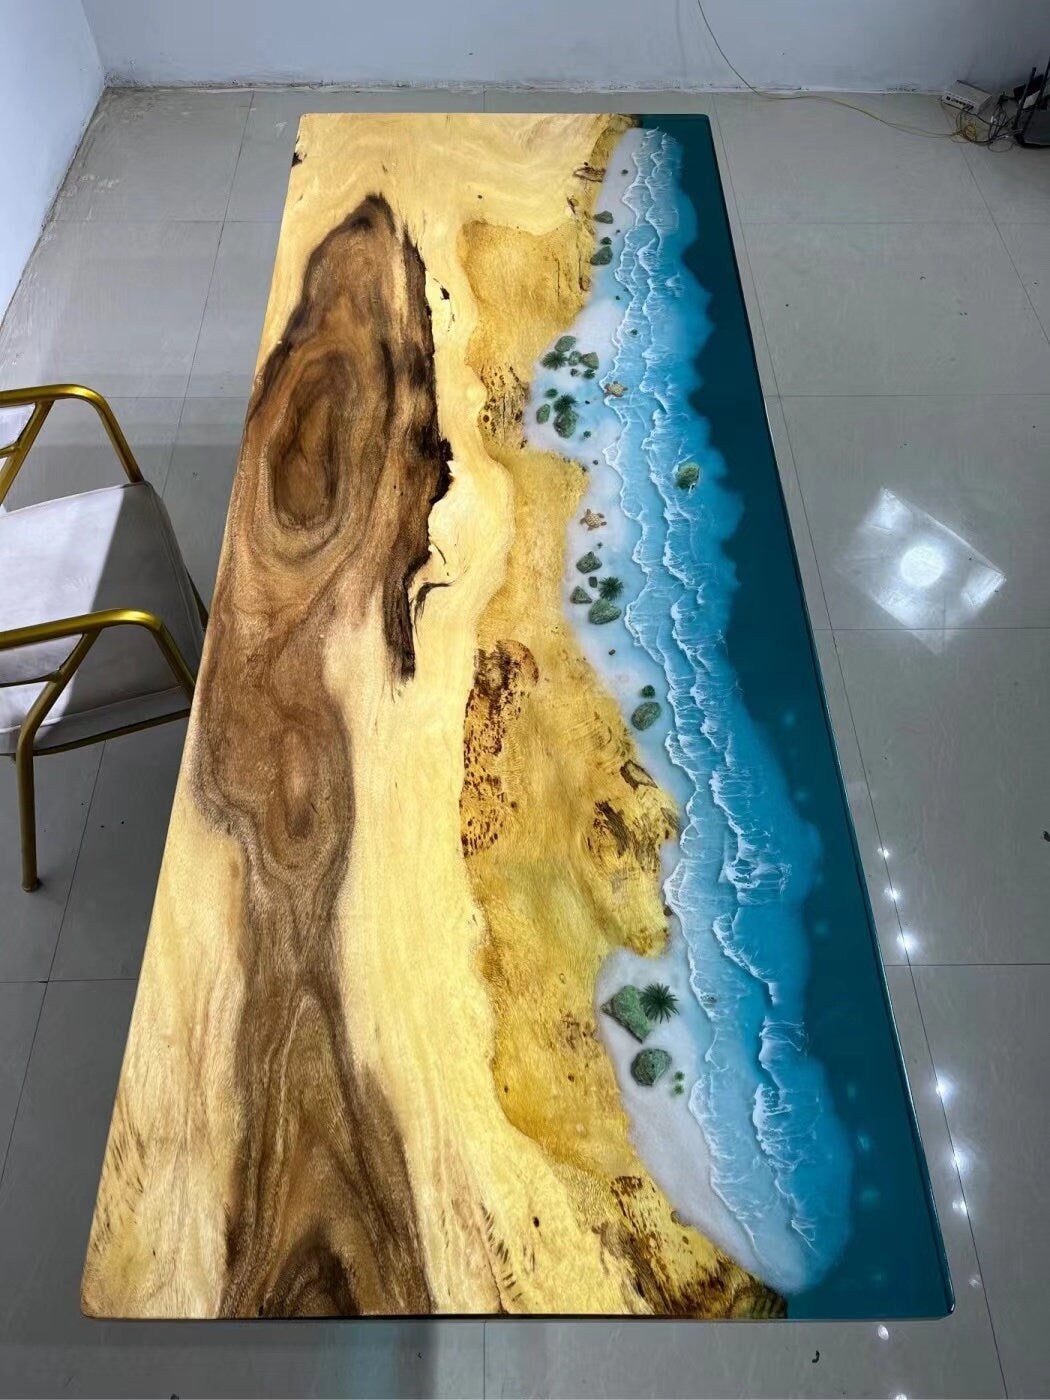 new blue sea river modern blue ocean dining room furniture wood walnut Epoxy Resin table